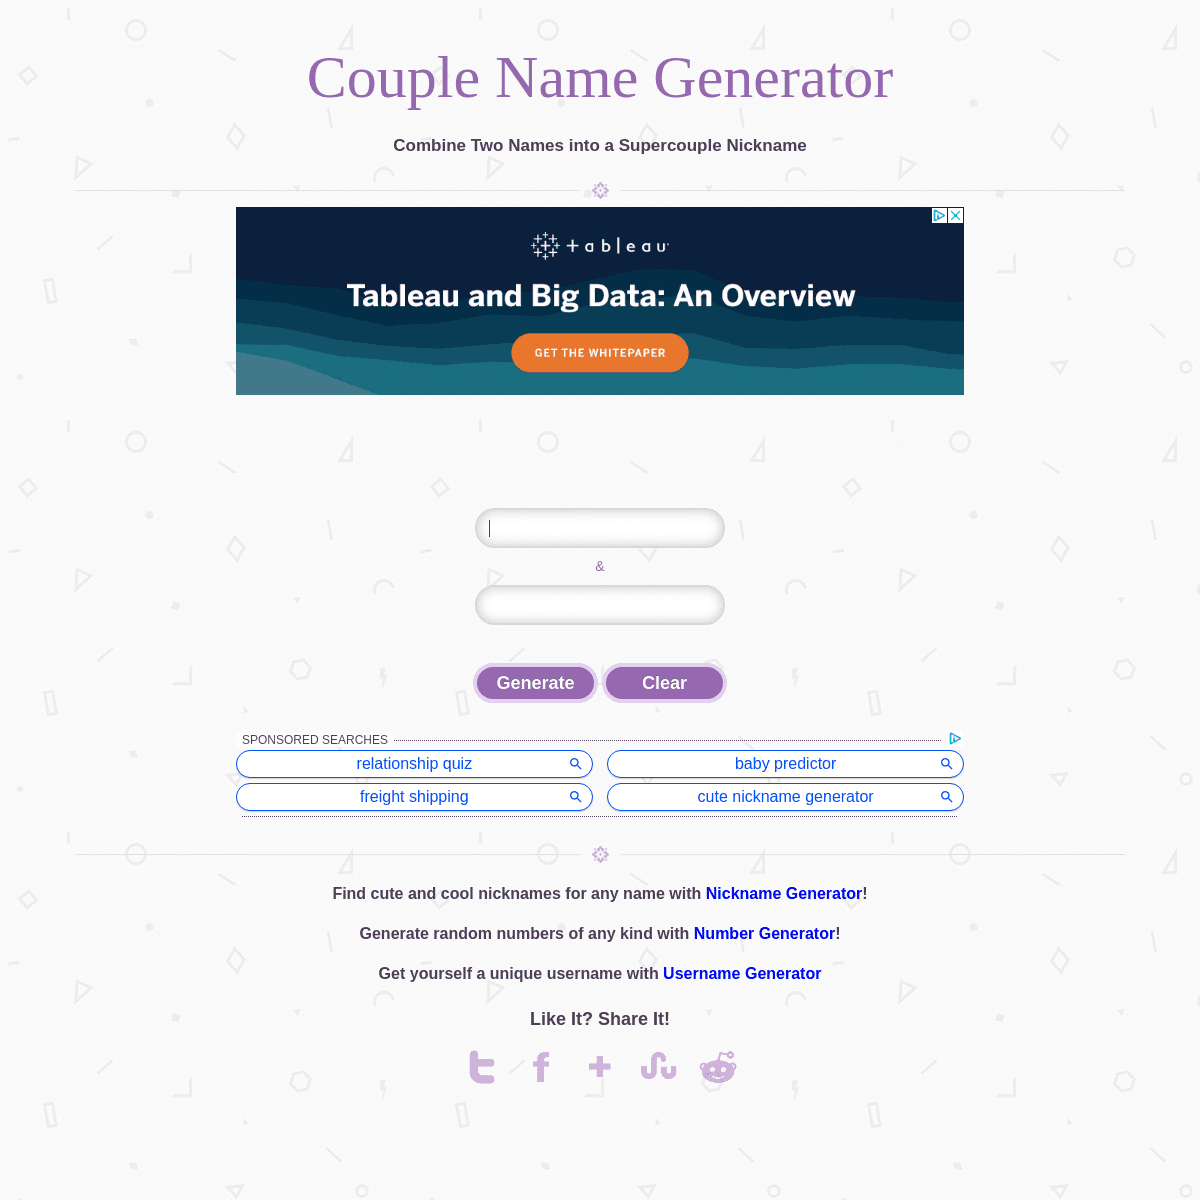 A complete backup of couplenamegenerator.com